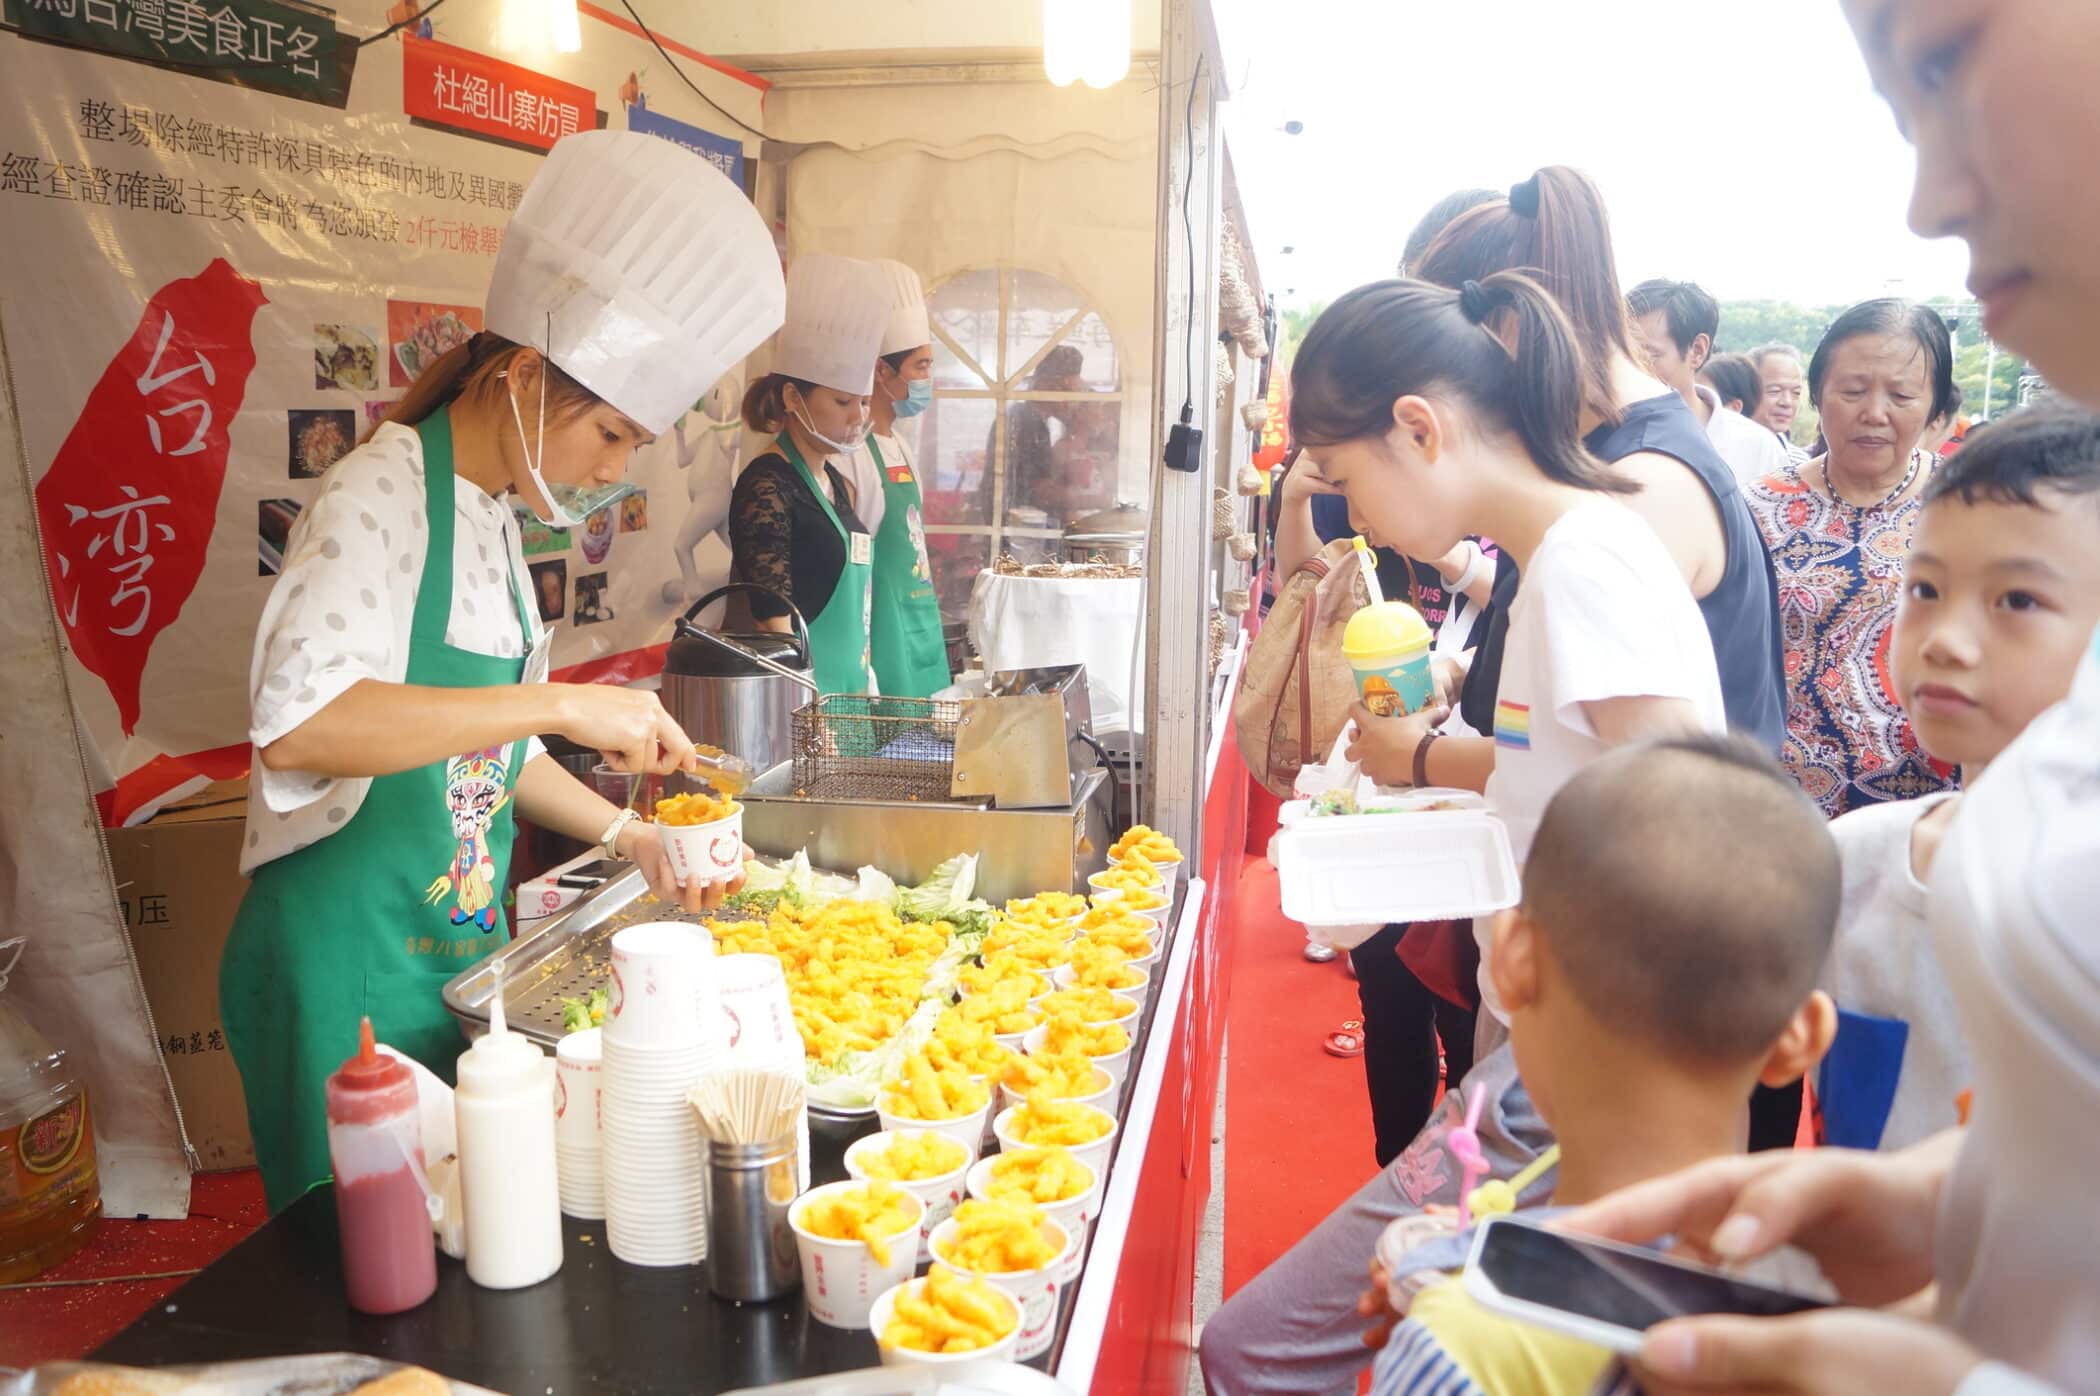 Taiwan food festival activities